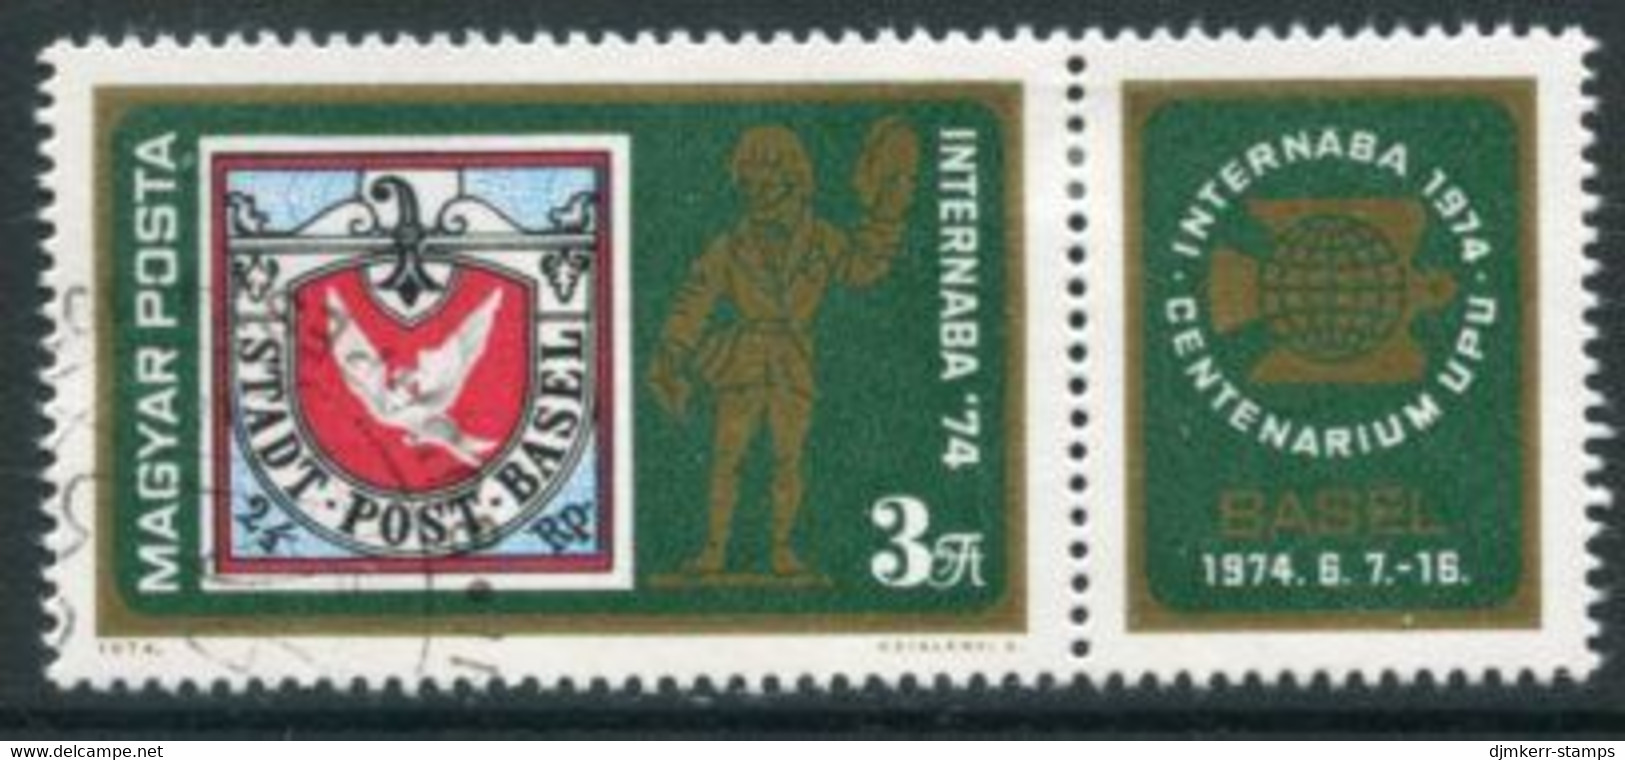 HUNGARY 1974 INTERNABA Stamp Exhibition Used.  Michel 2956 - Gebraucht